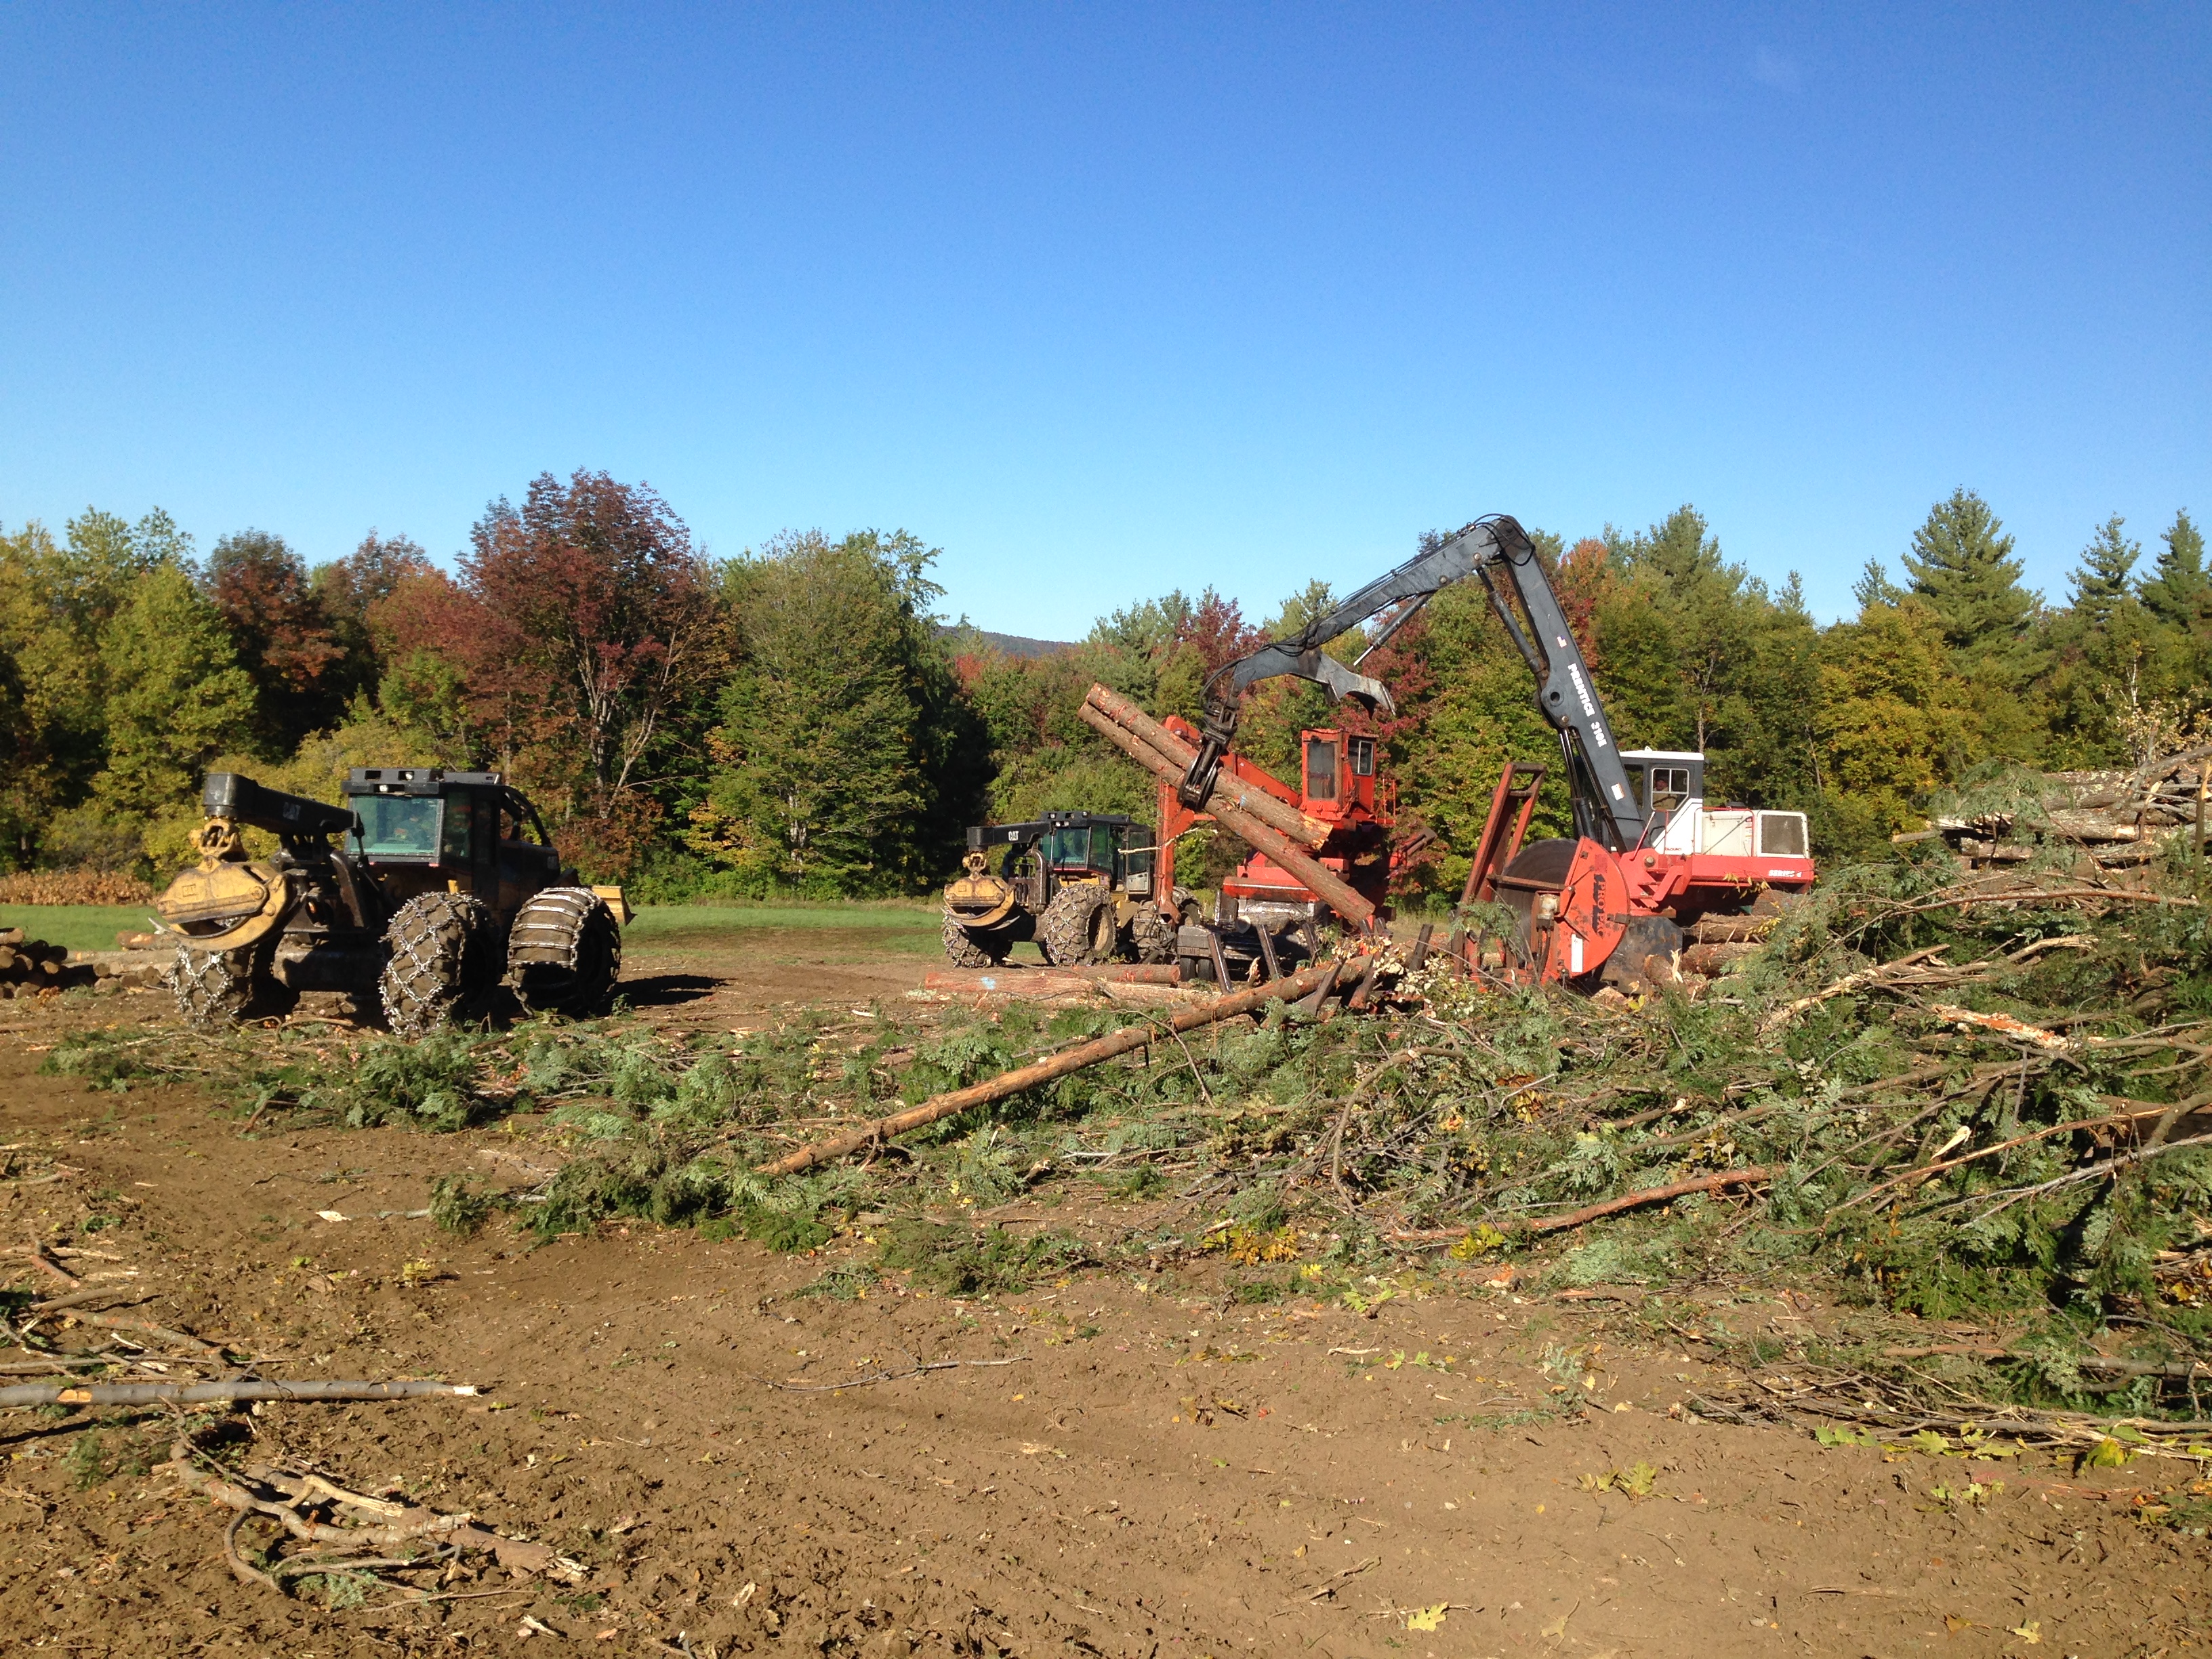 Harvesting equipment on an active logging job